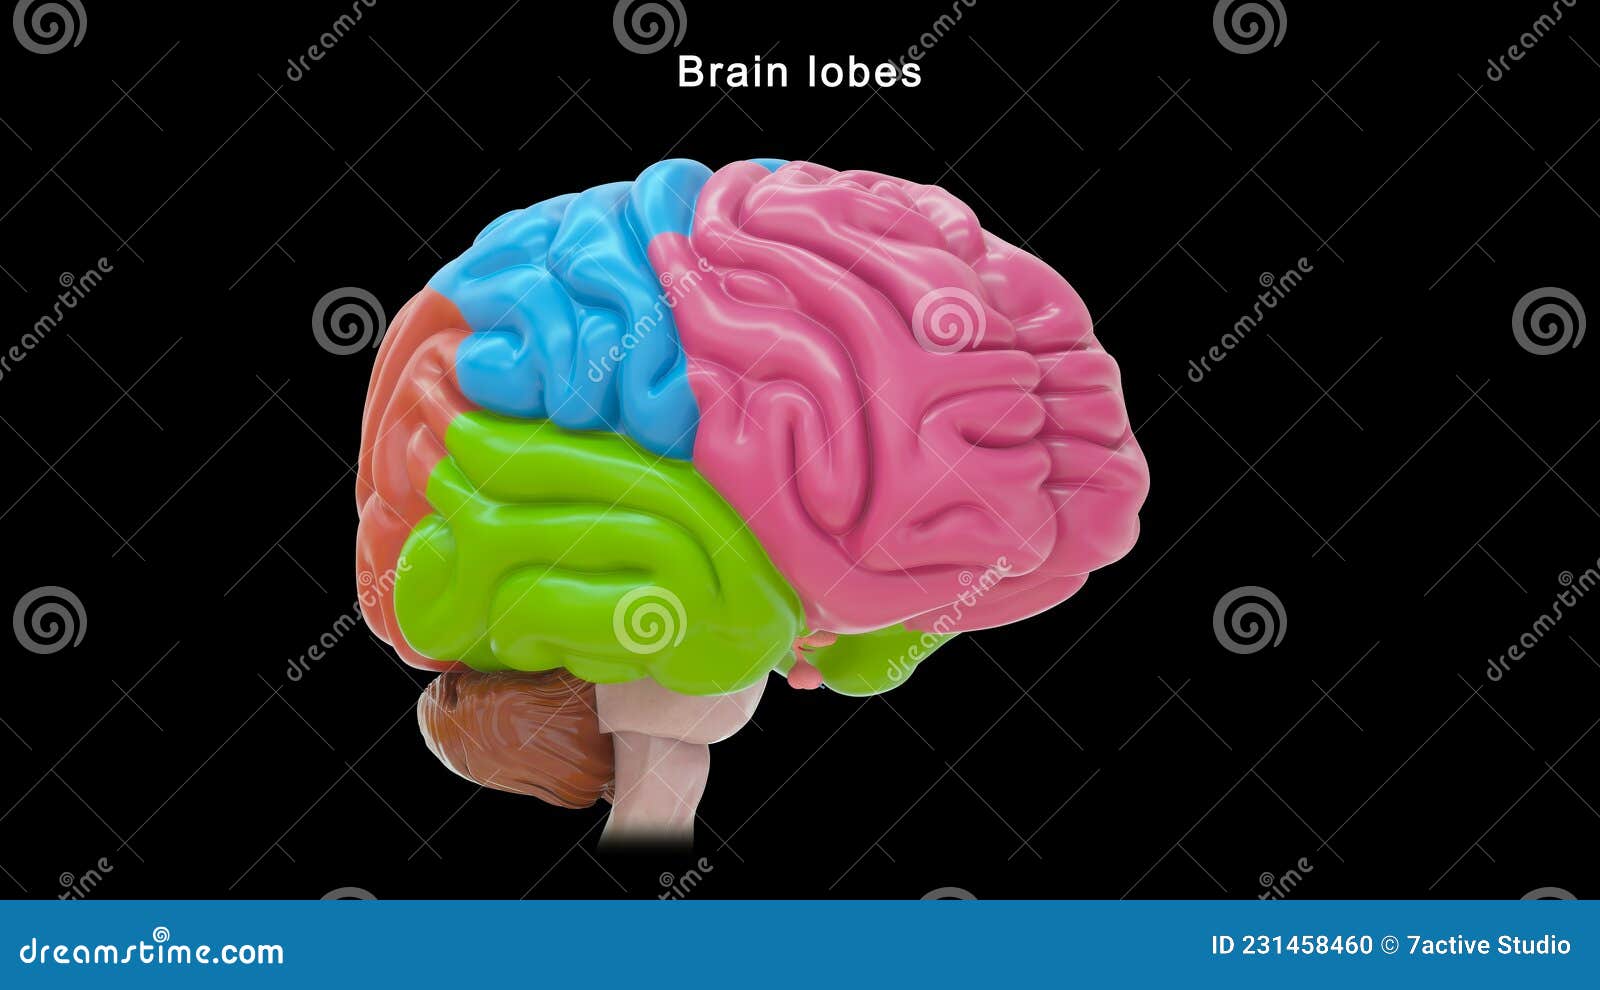 lobes of human brain or 4 lobes of brain